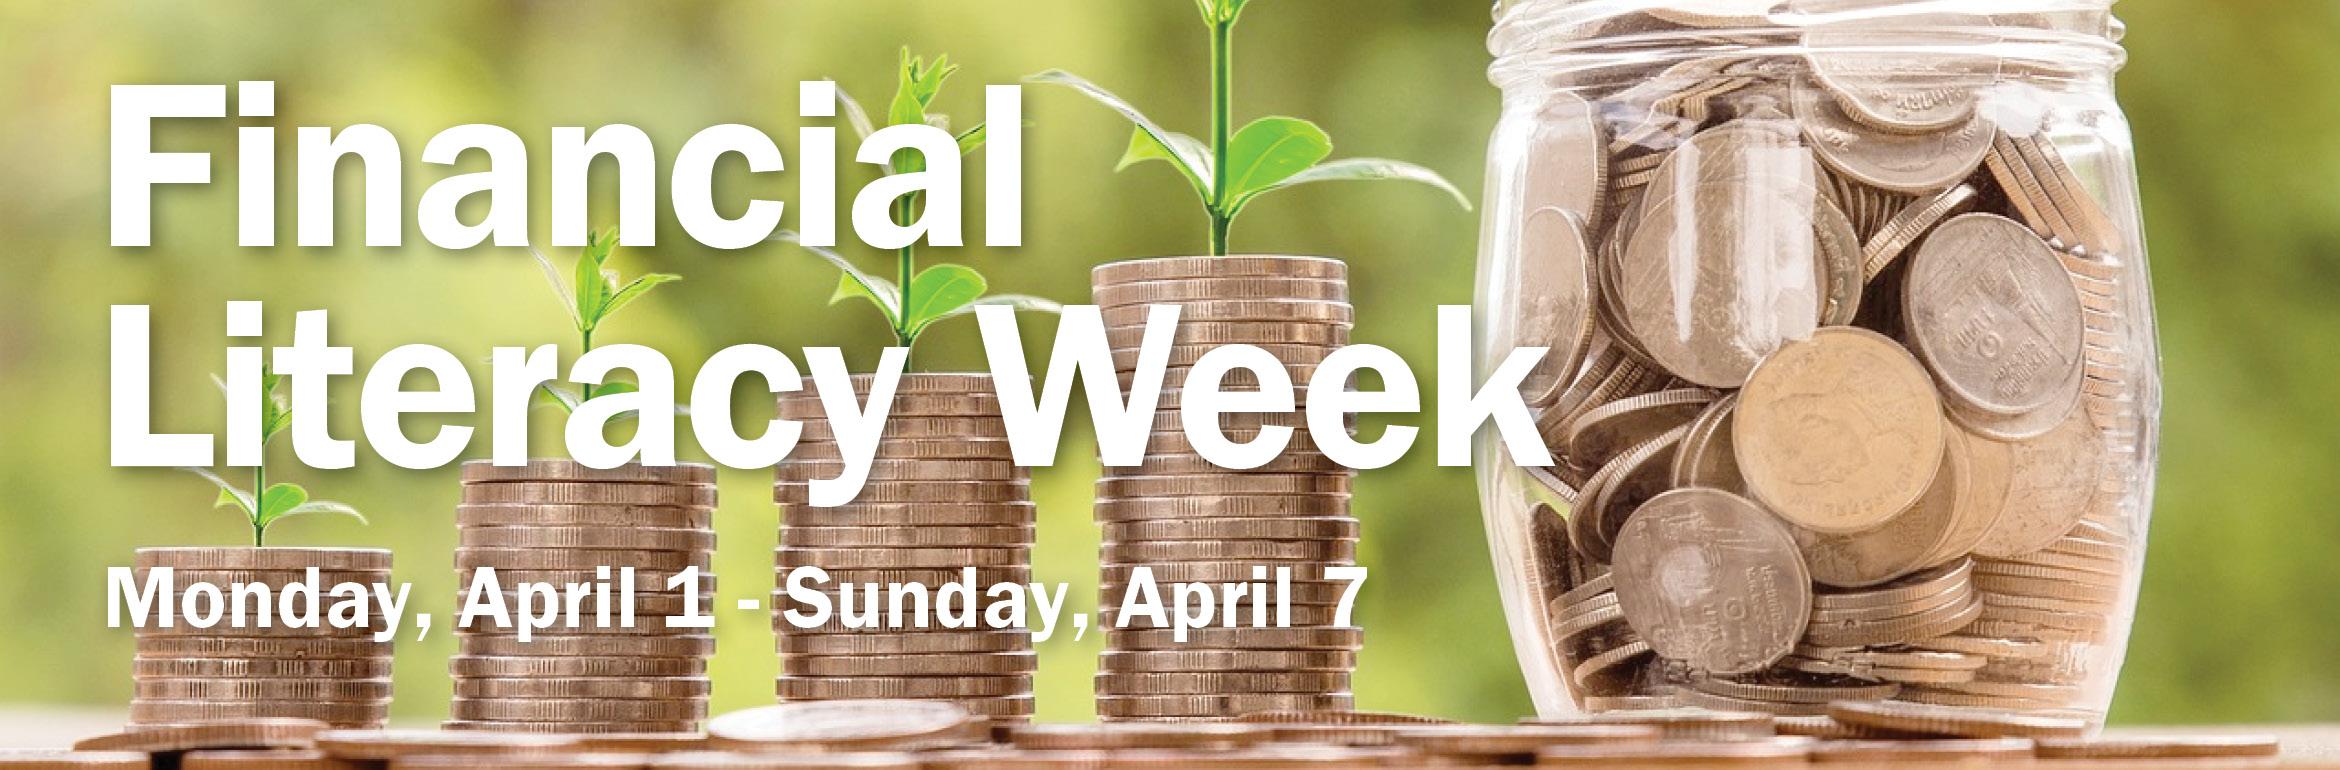 Financial Literacy Week. Monday, April 1 - Sunday, April 7.